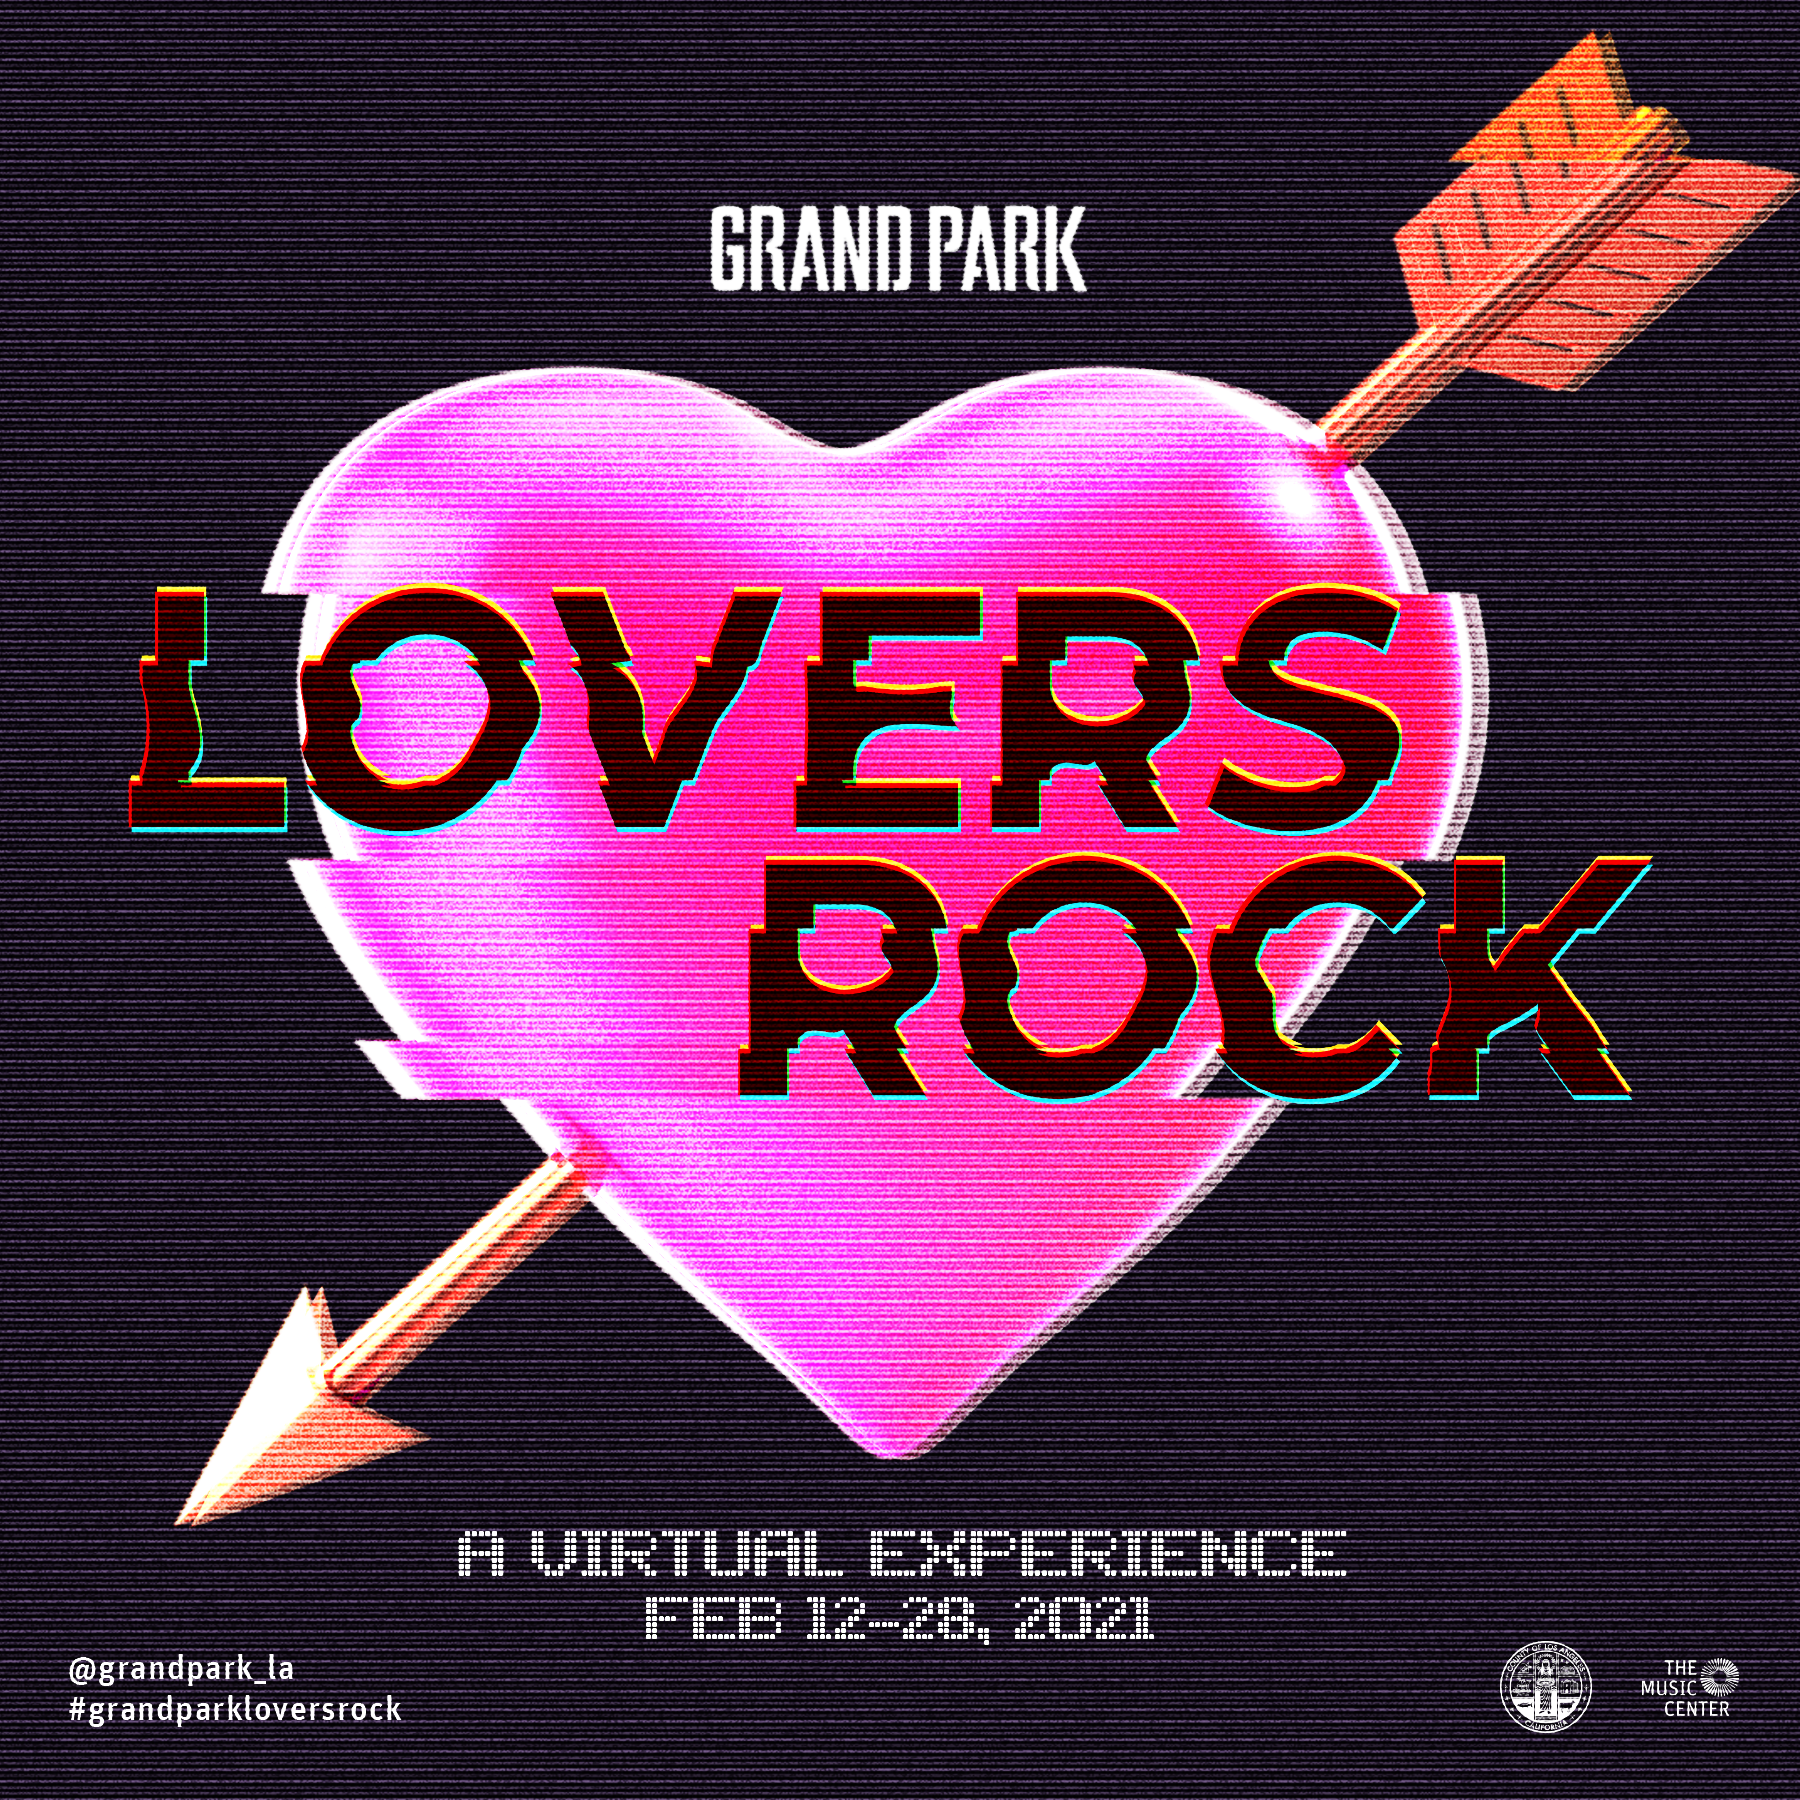 Grand Park Lovers Rock: A Virtual Experience @ Grand Park virtual platforms: Spotify, Mixcloud, YouTube, IG Live